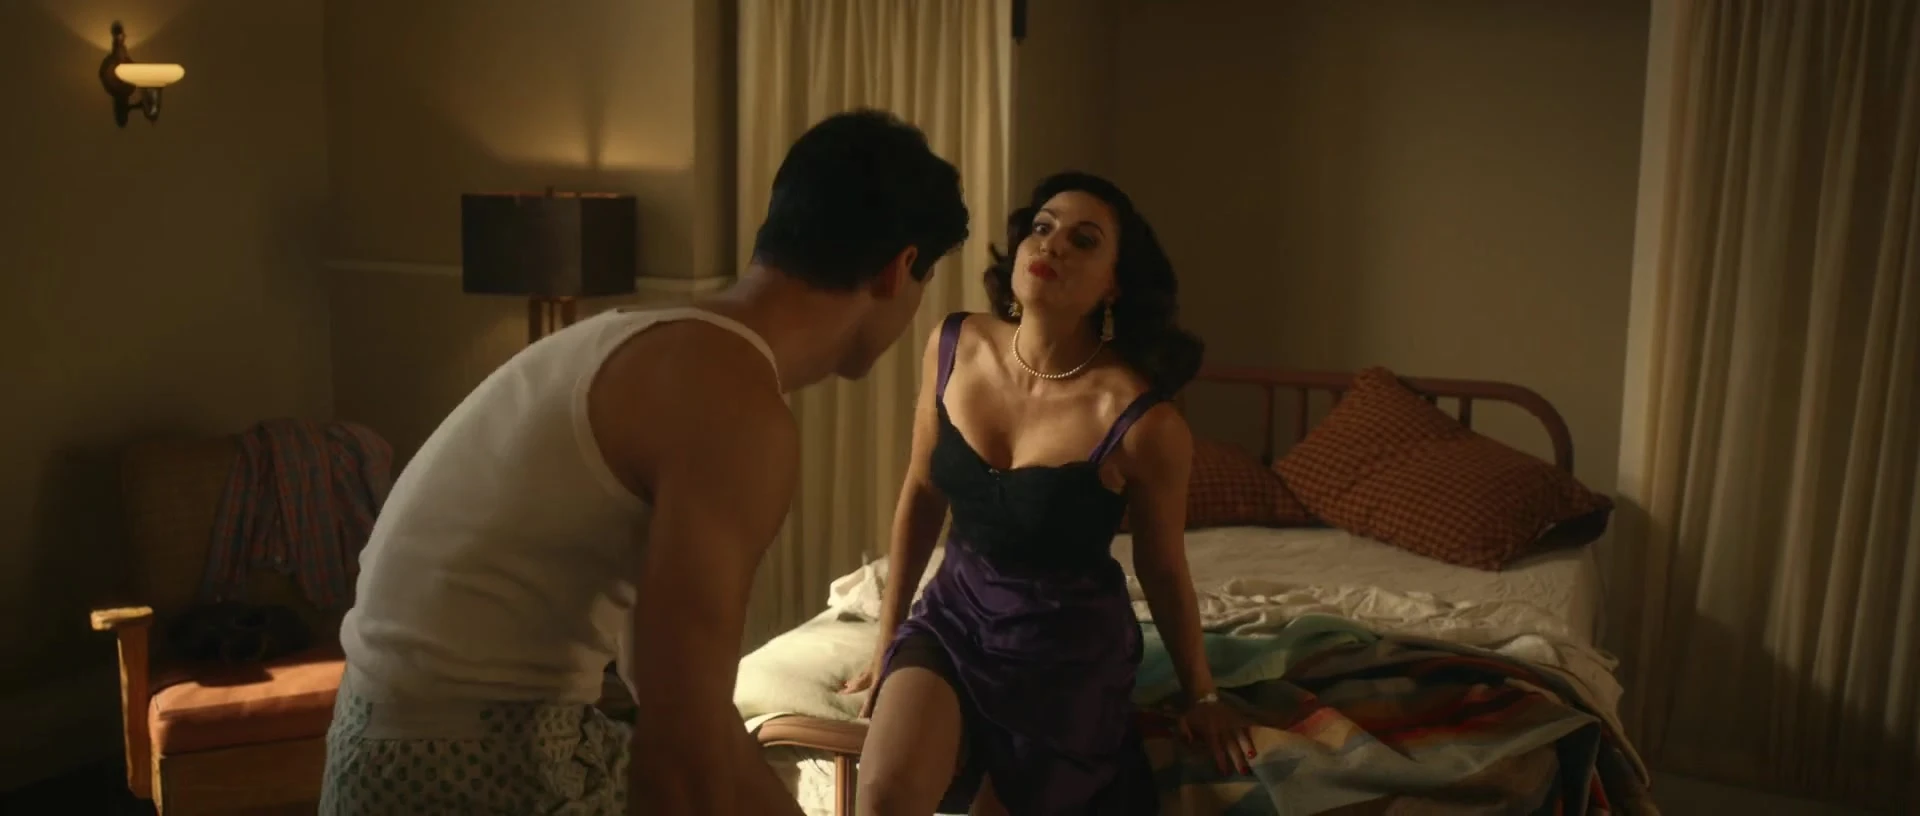 Lana parrilla sex scene